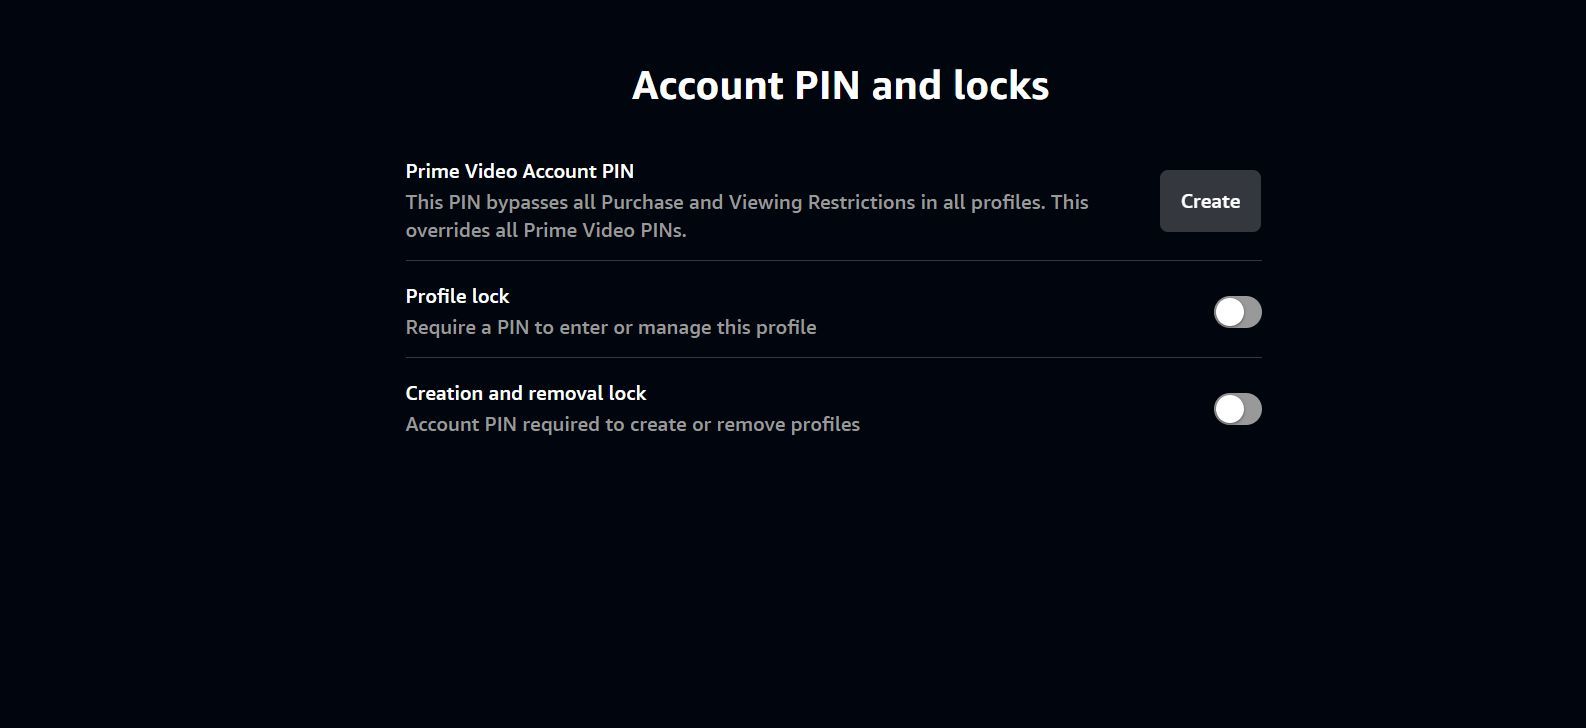 Captura de tela mostrando o PIN da conta e a página de bloqueio no site Amazon Prime Video